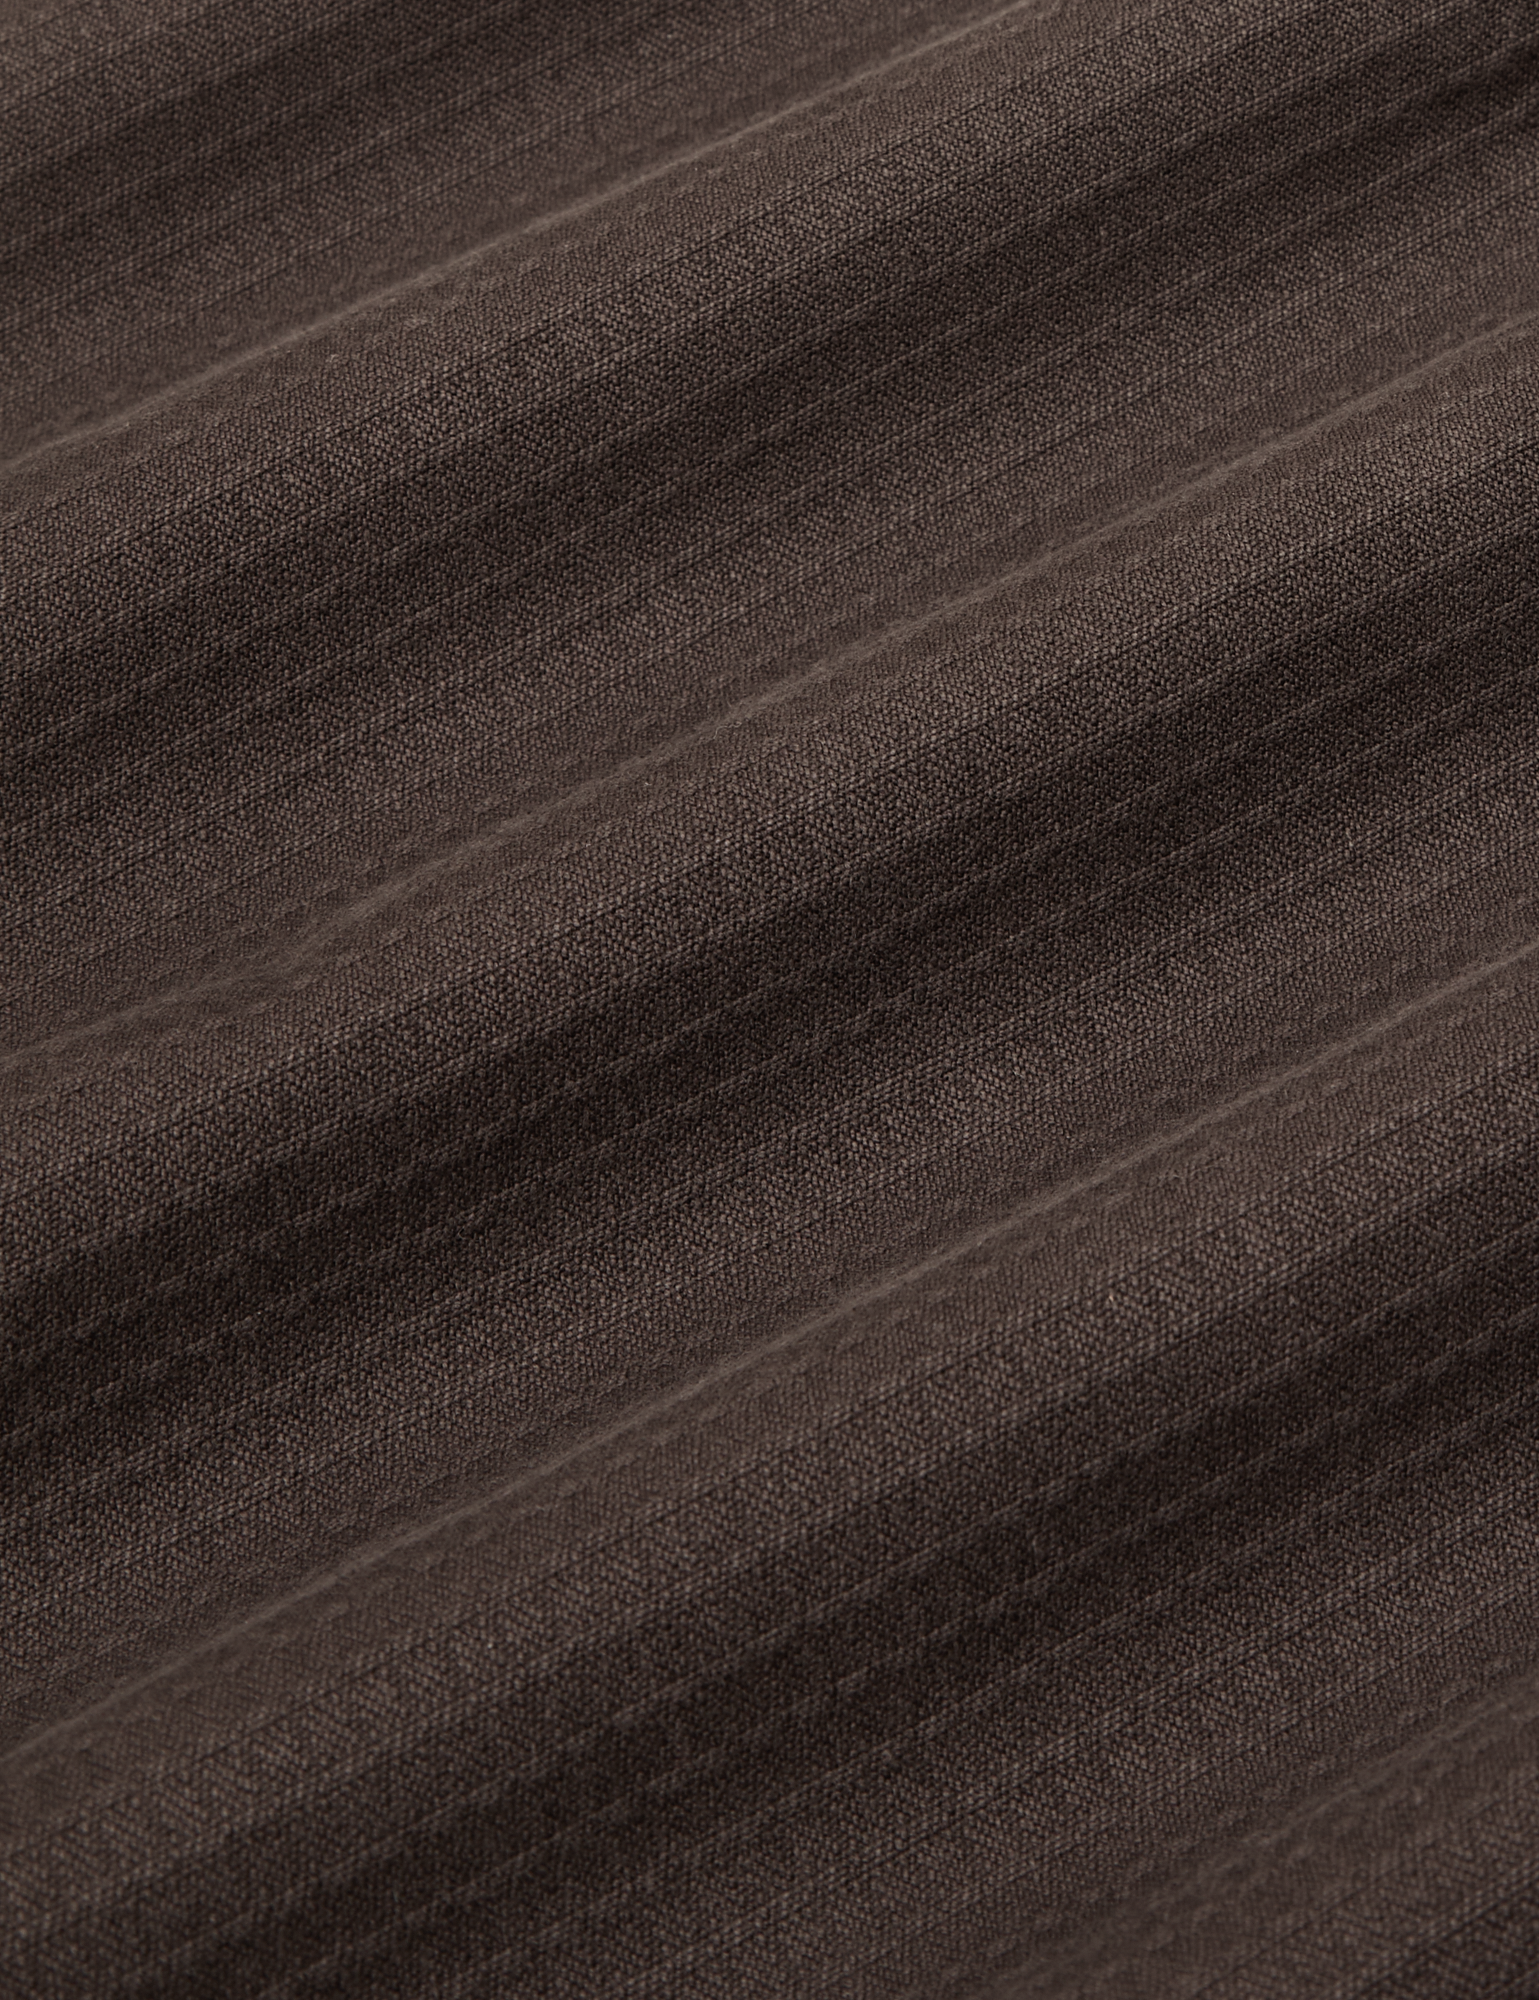 Field Coat in Espresso Brown fabric detail close up